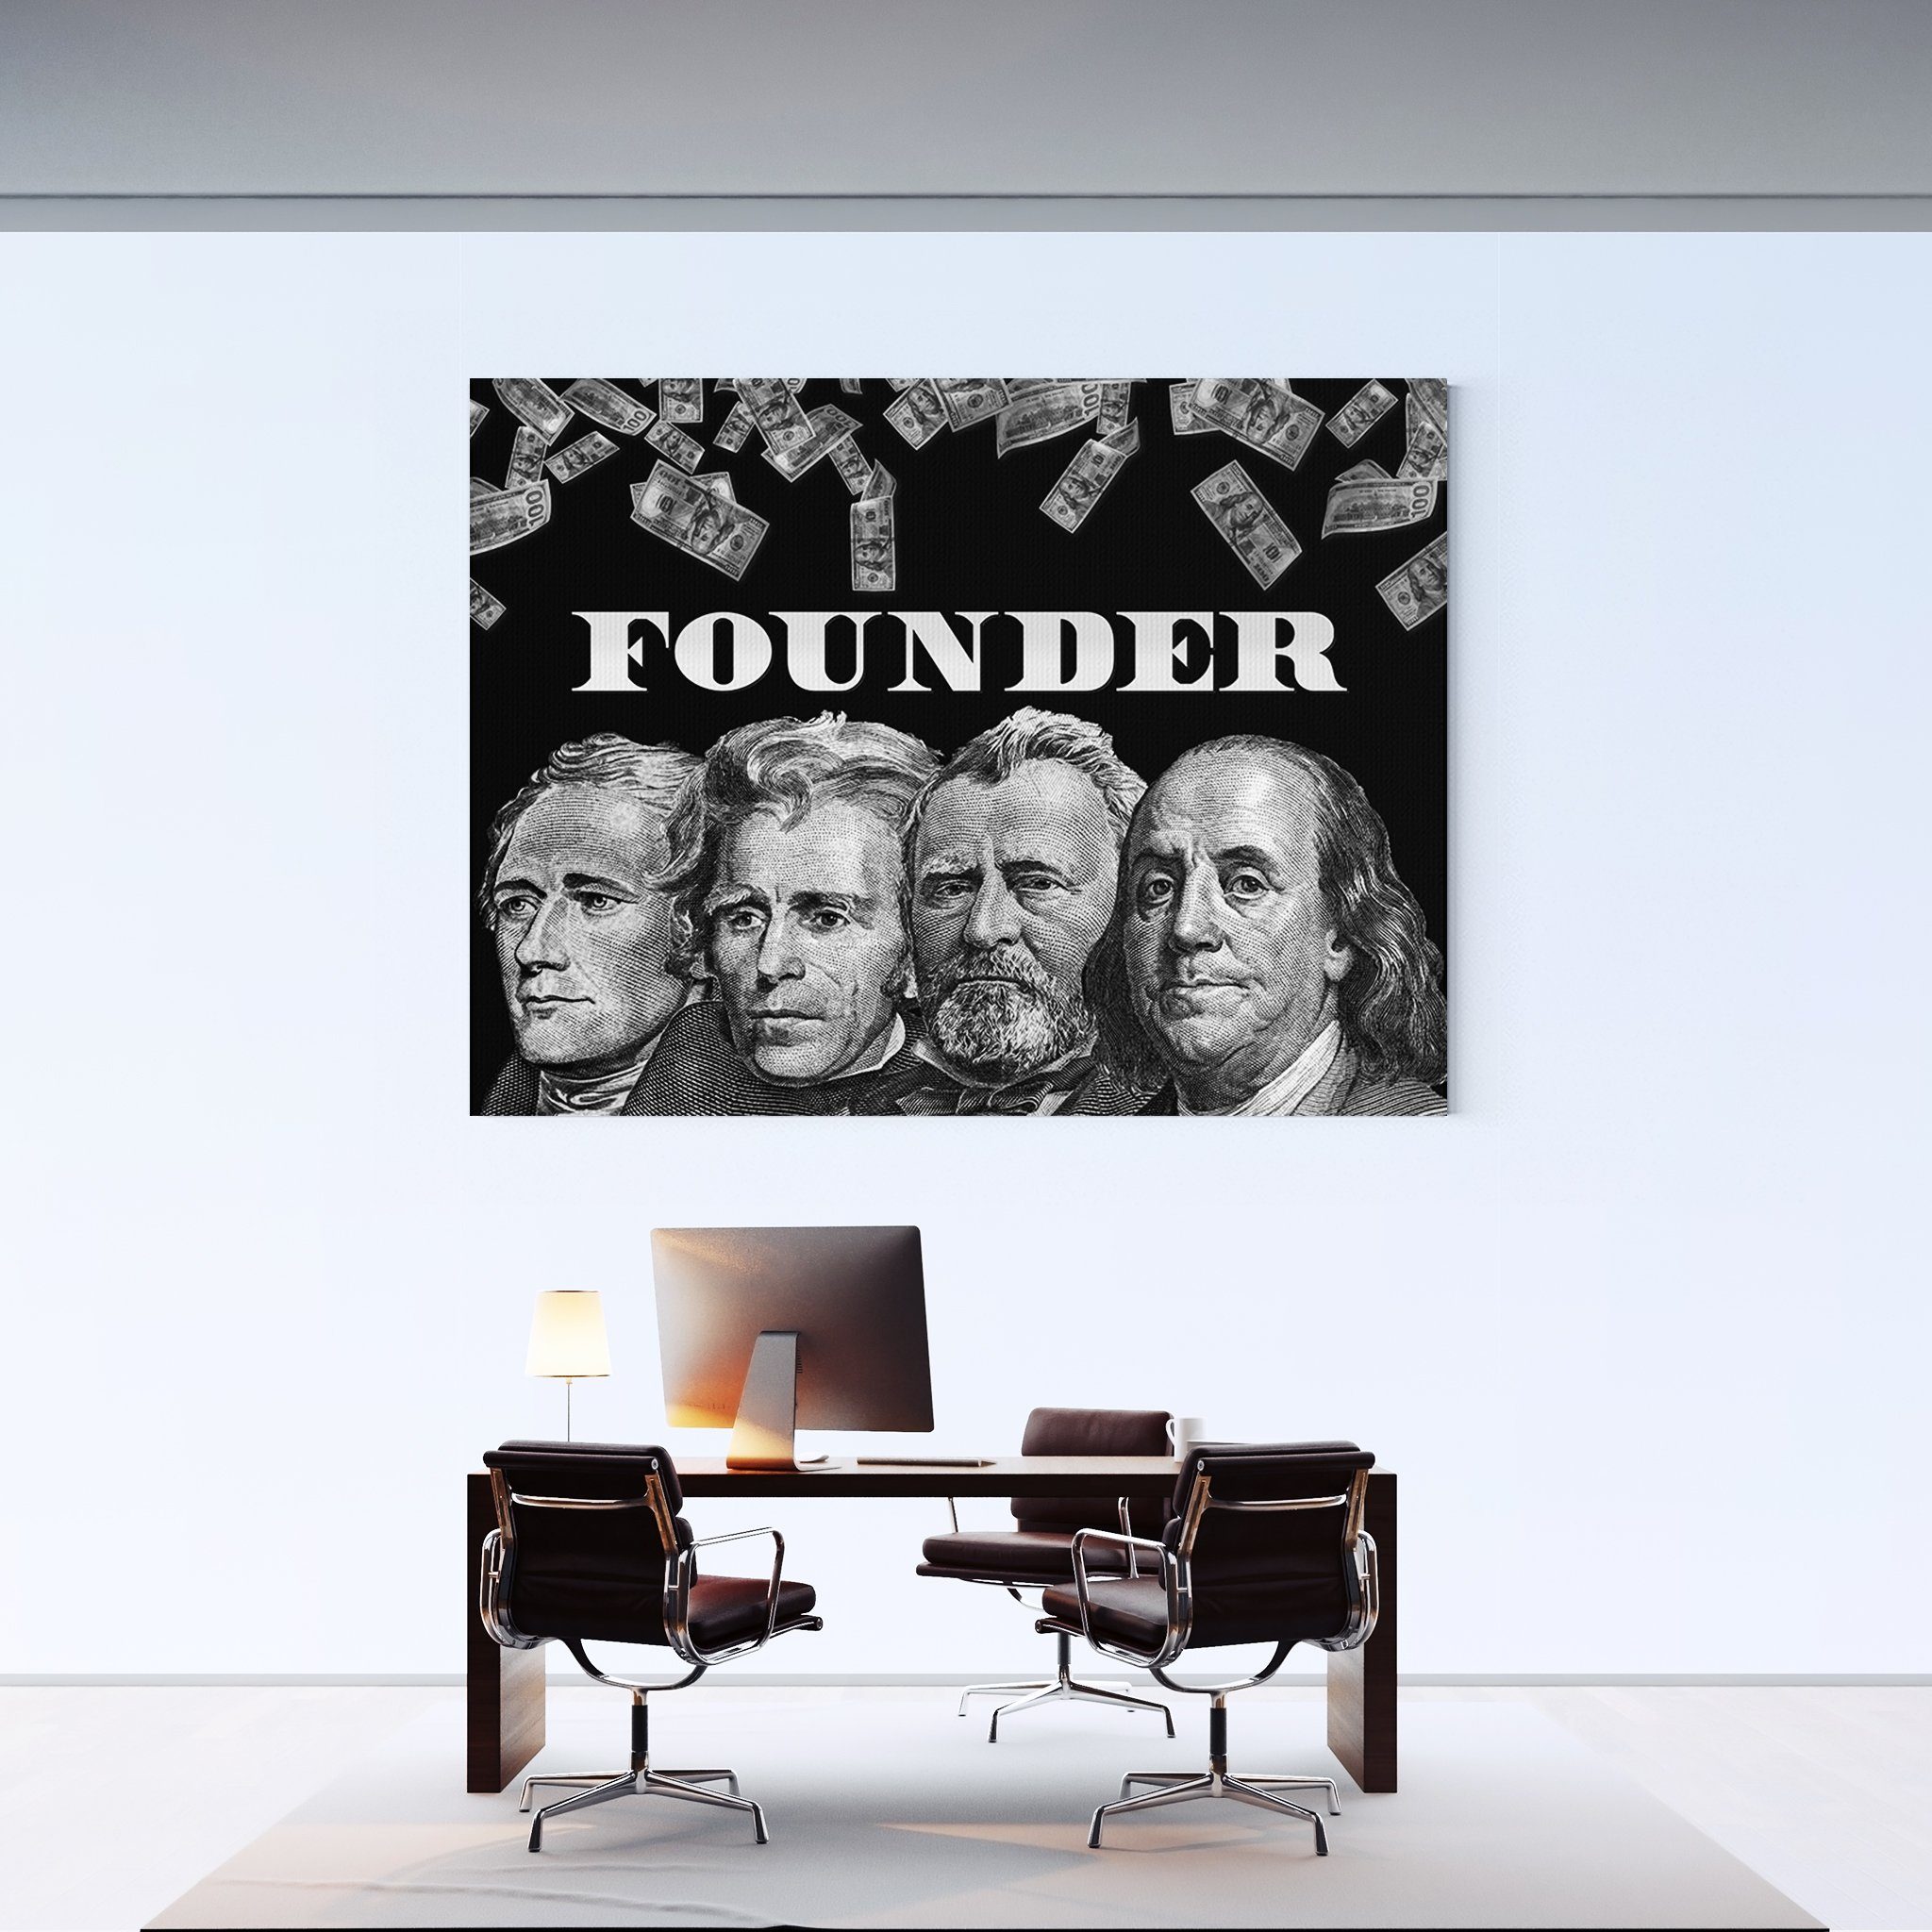 Founder